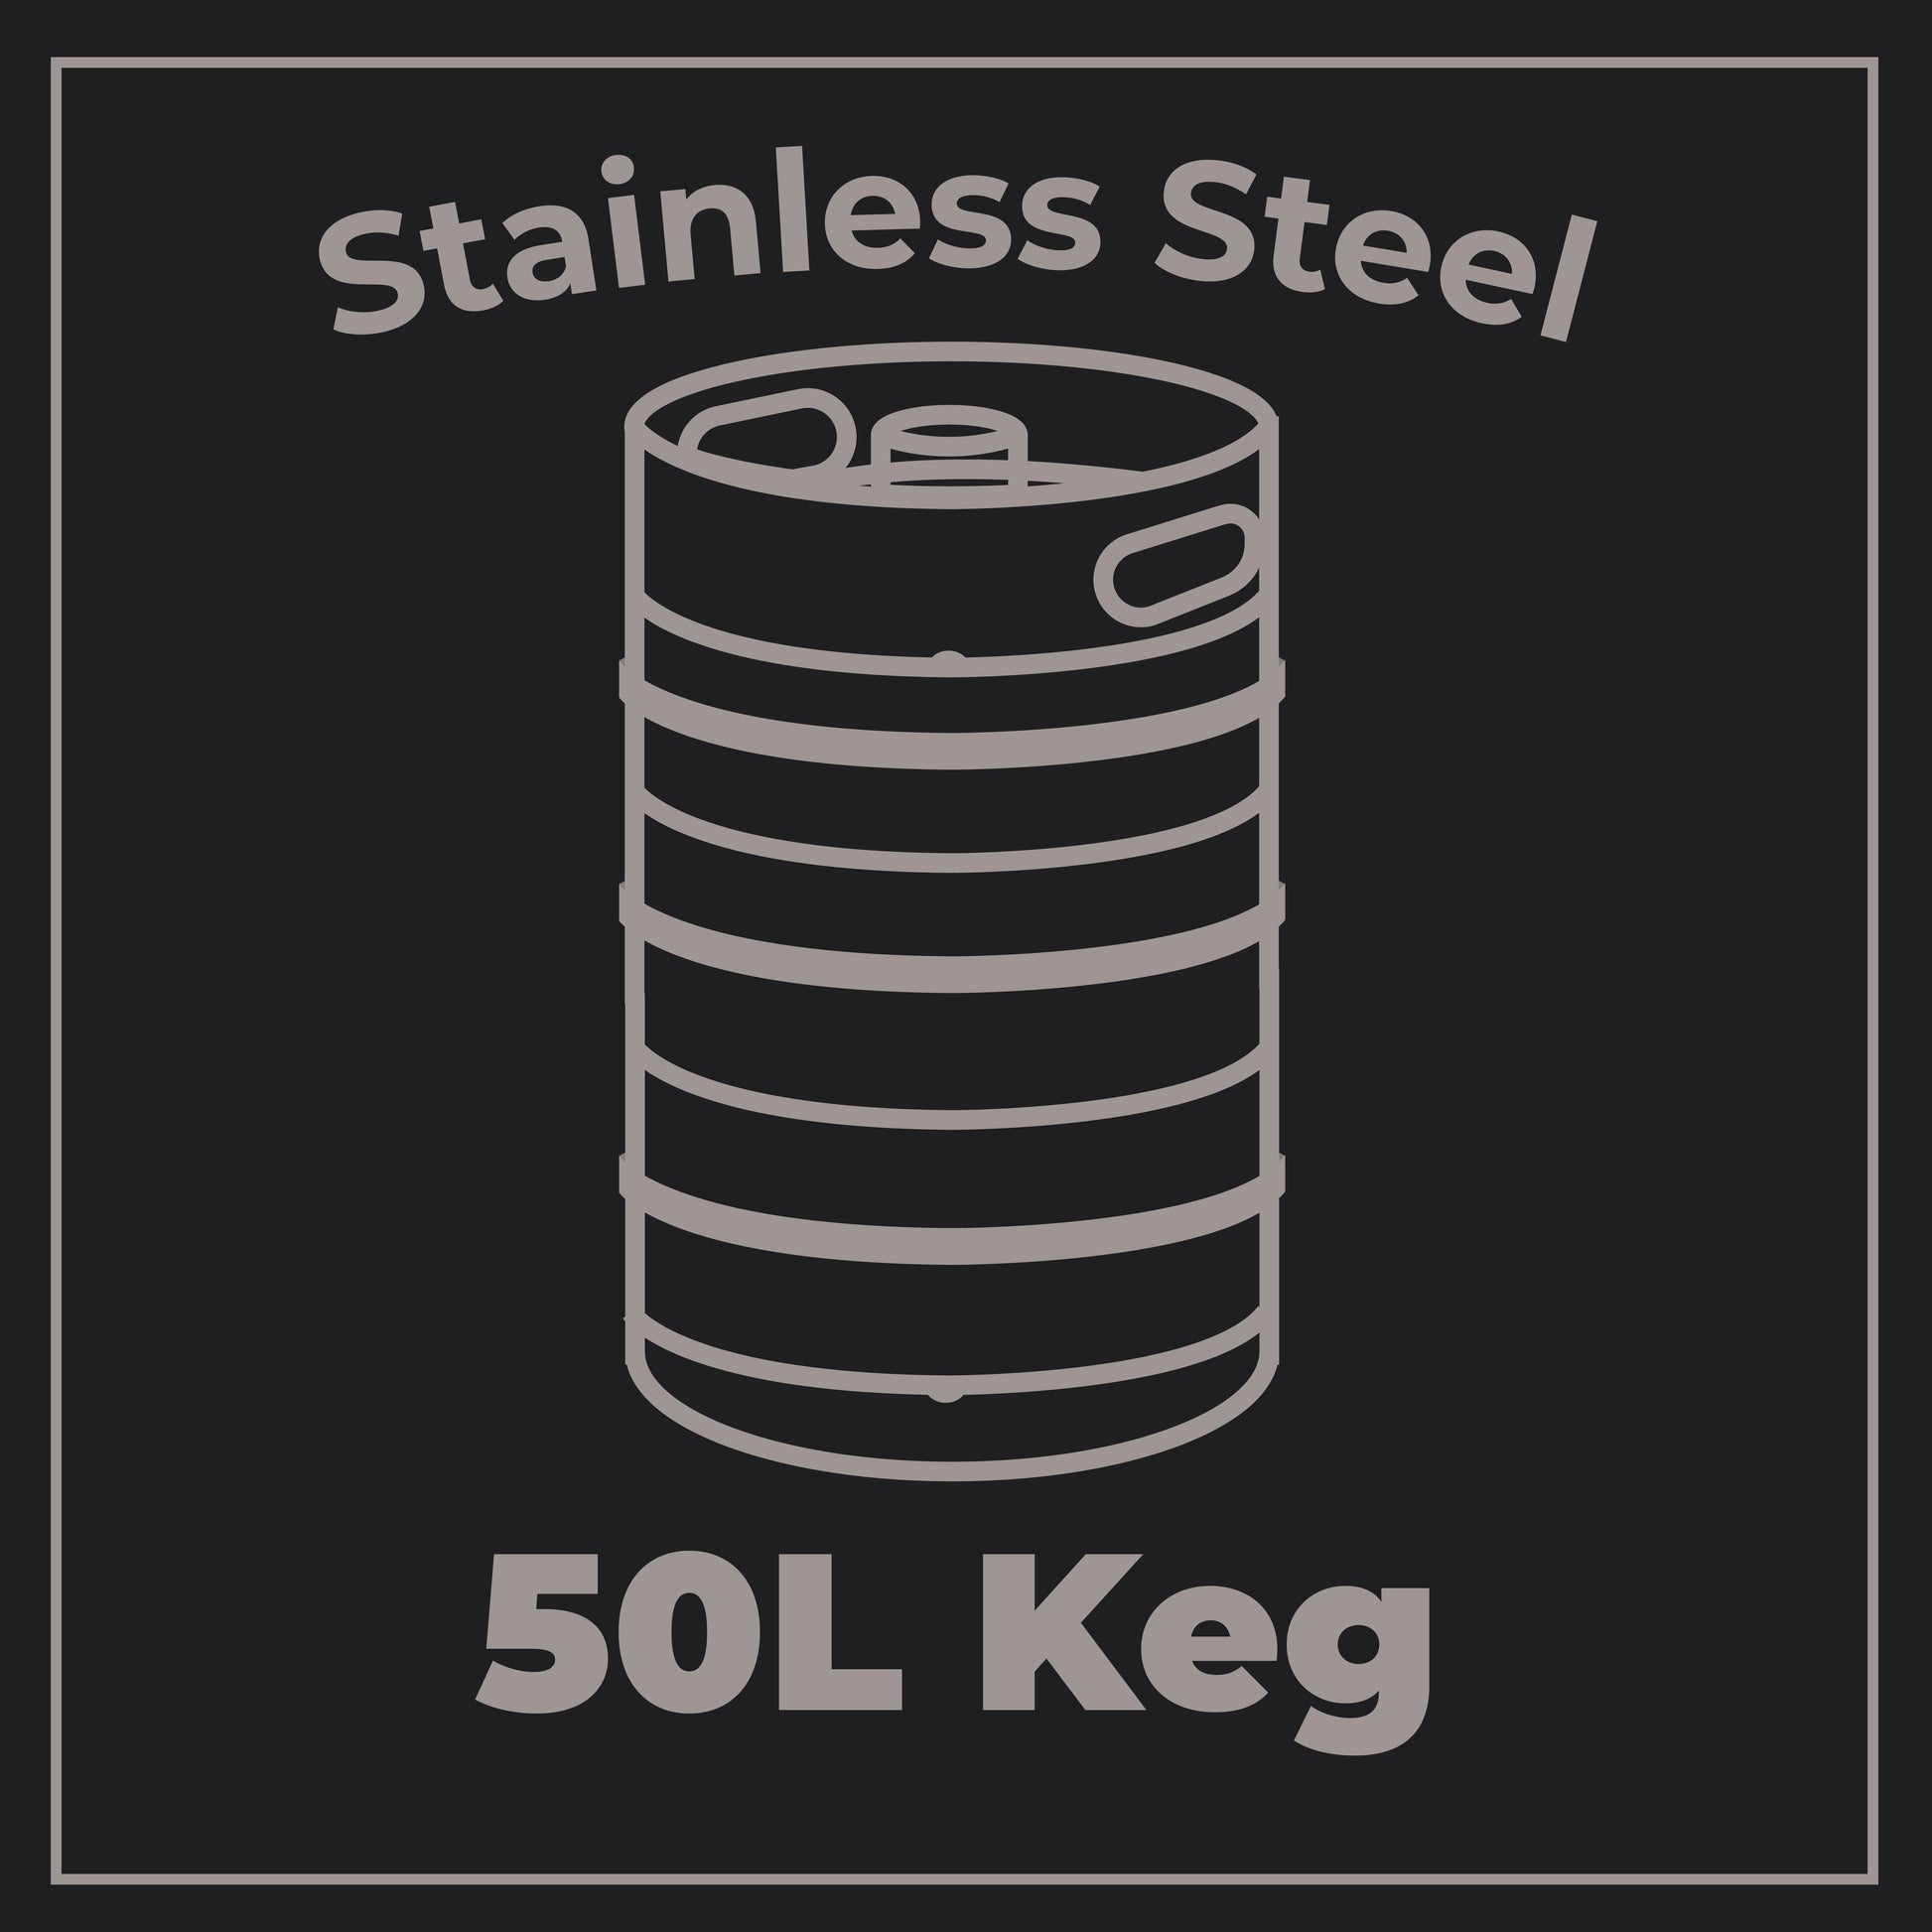 Stella Artois - Lager - 4.8% Abv - 50l Keg (88 Pints) - Stainless Steel Keg